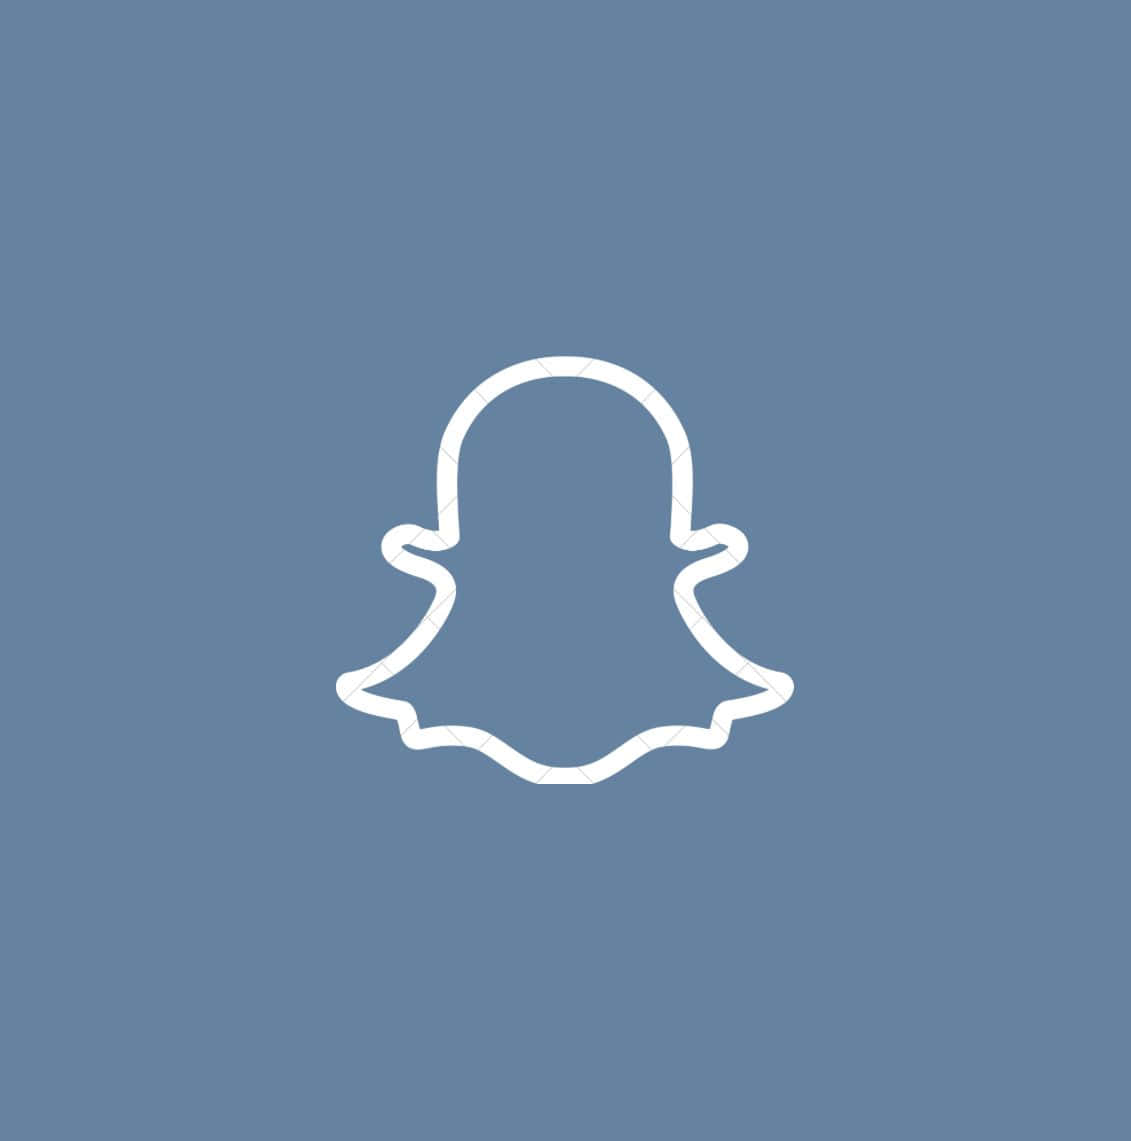 Snapchat Logo On A Blue Background